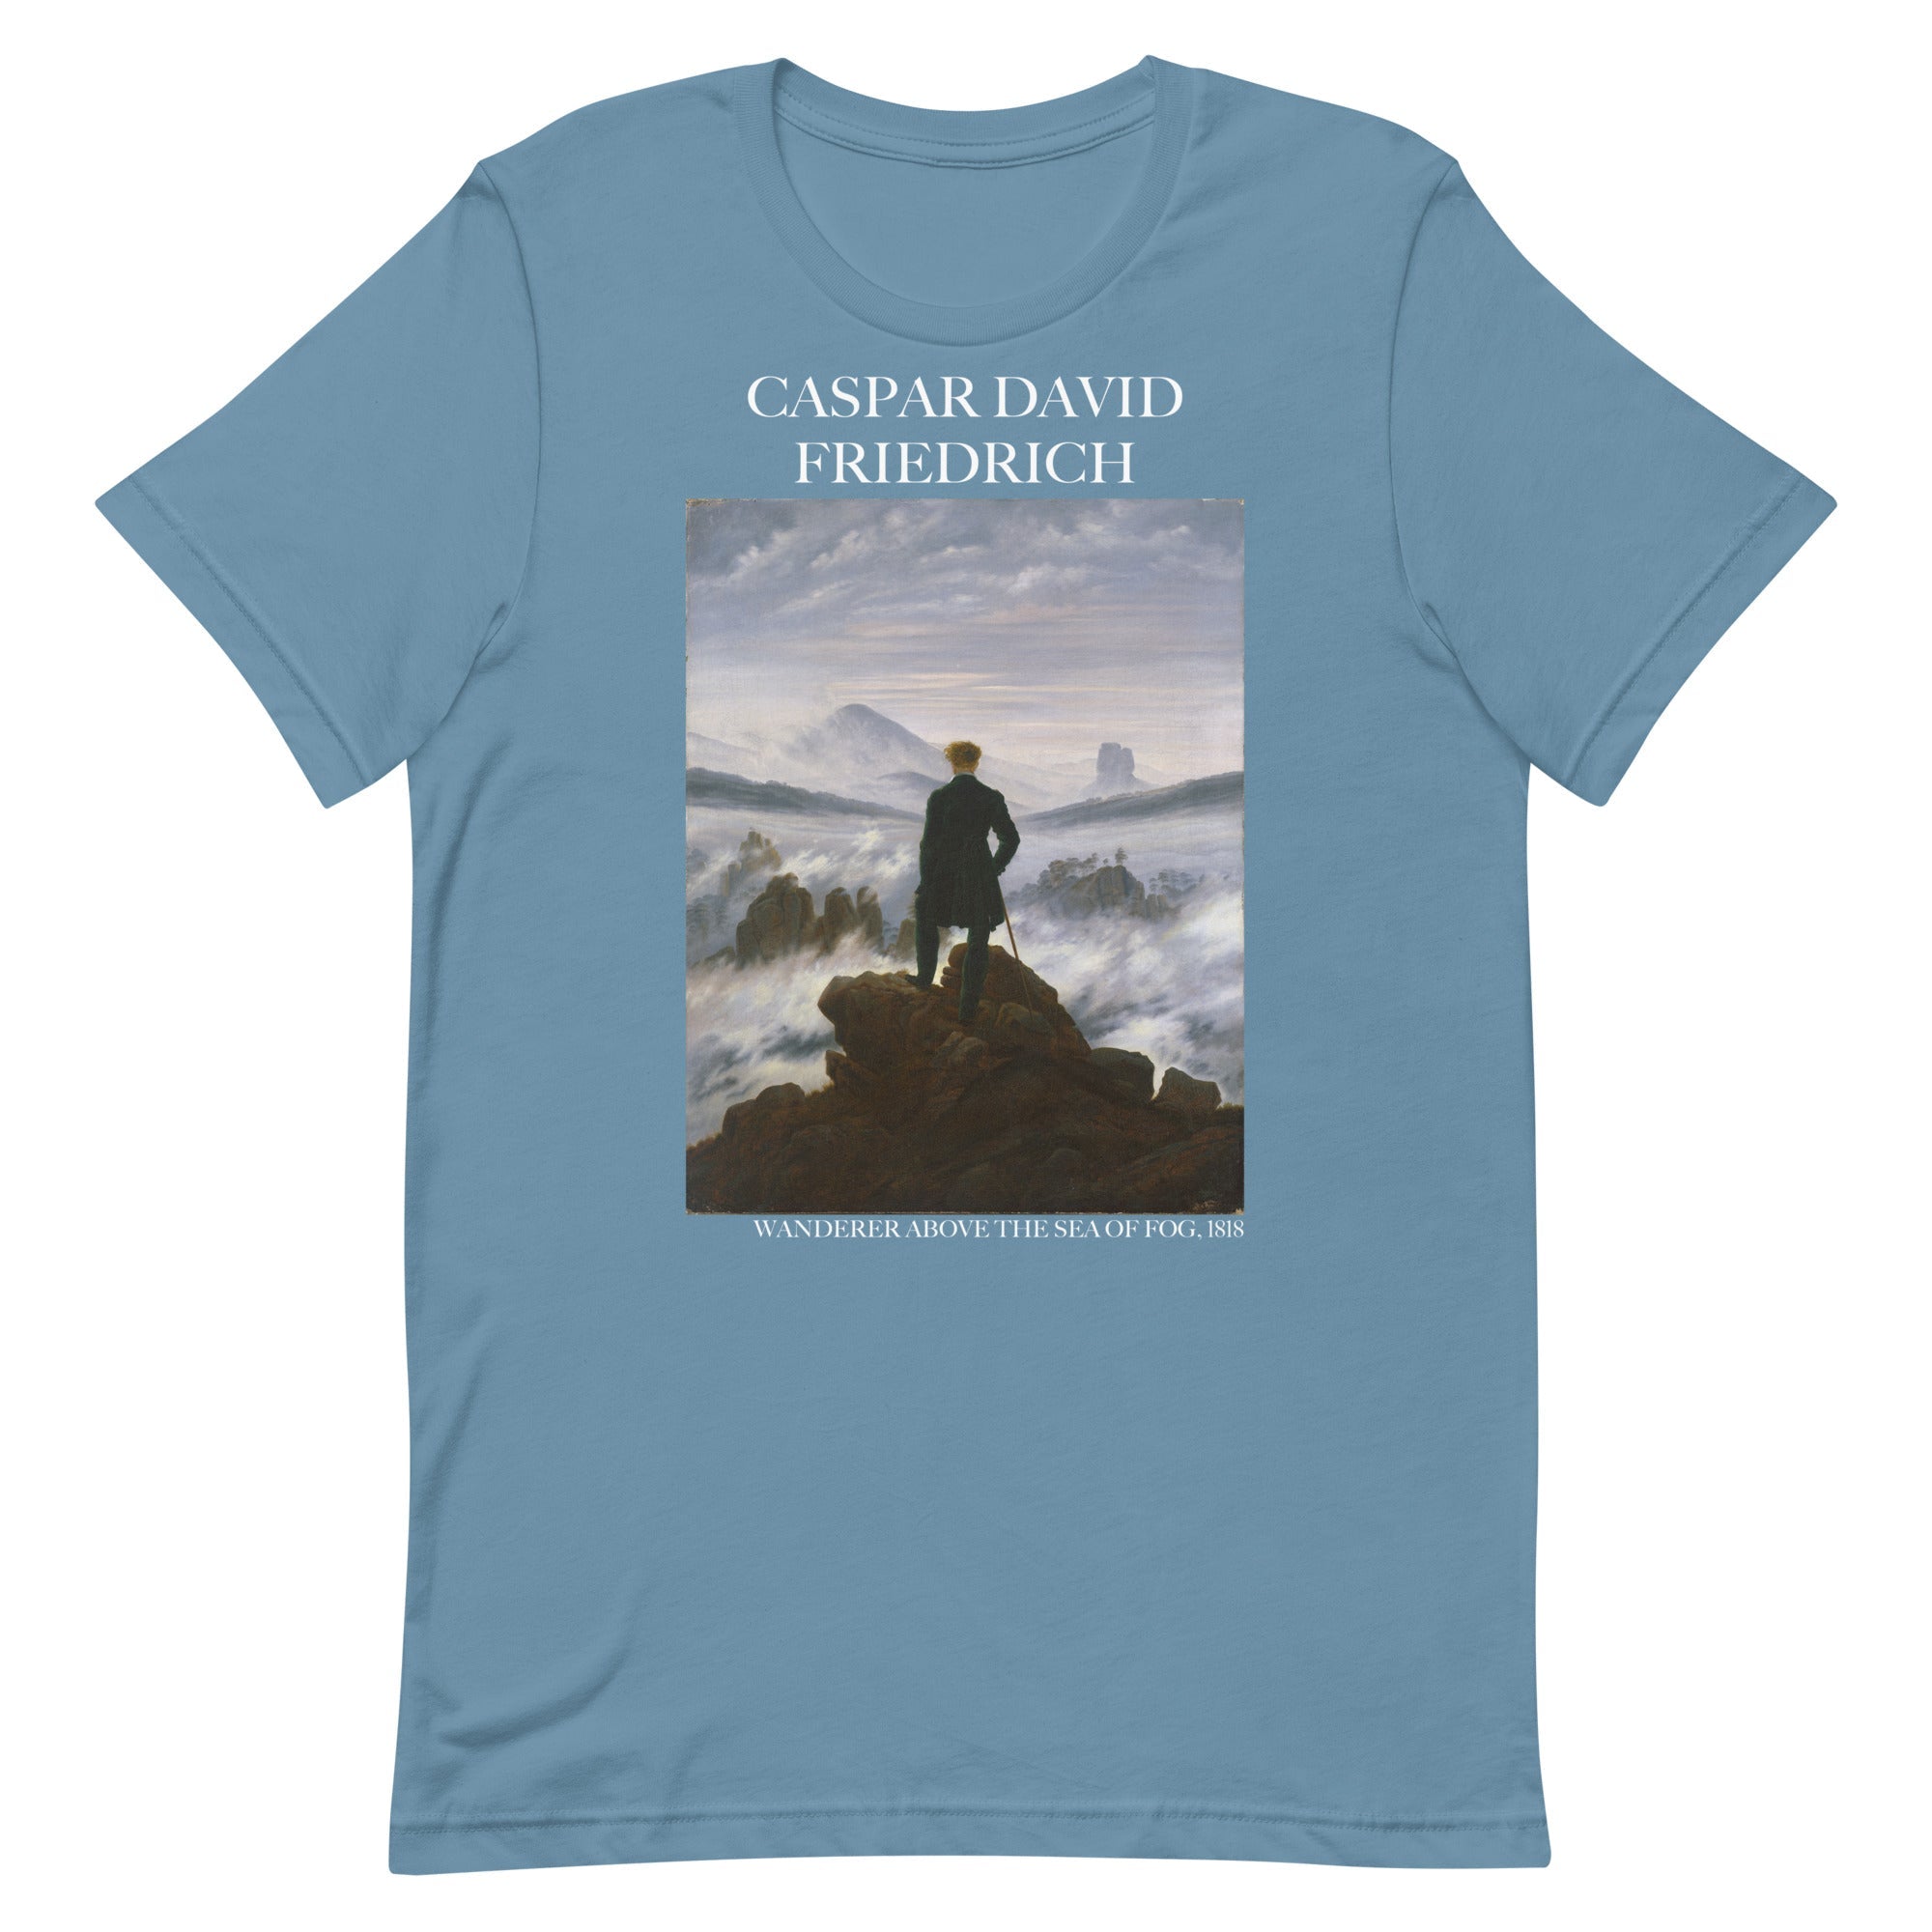 Caspar David Friedrich 'Wanderer Above the Sea of Fog' Famous Painting T-Shirt | Unisex Classic Art Tee